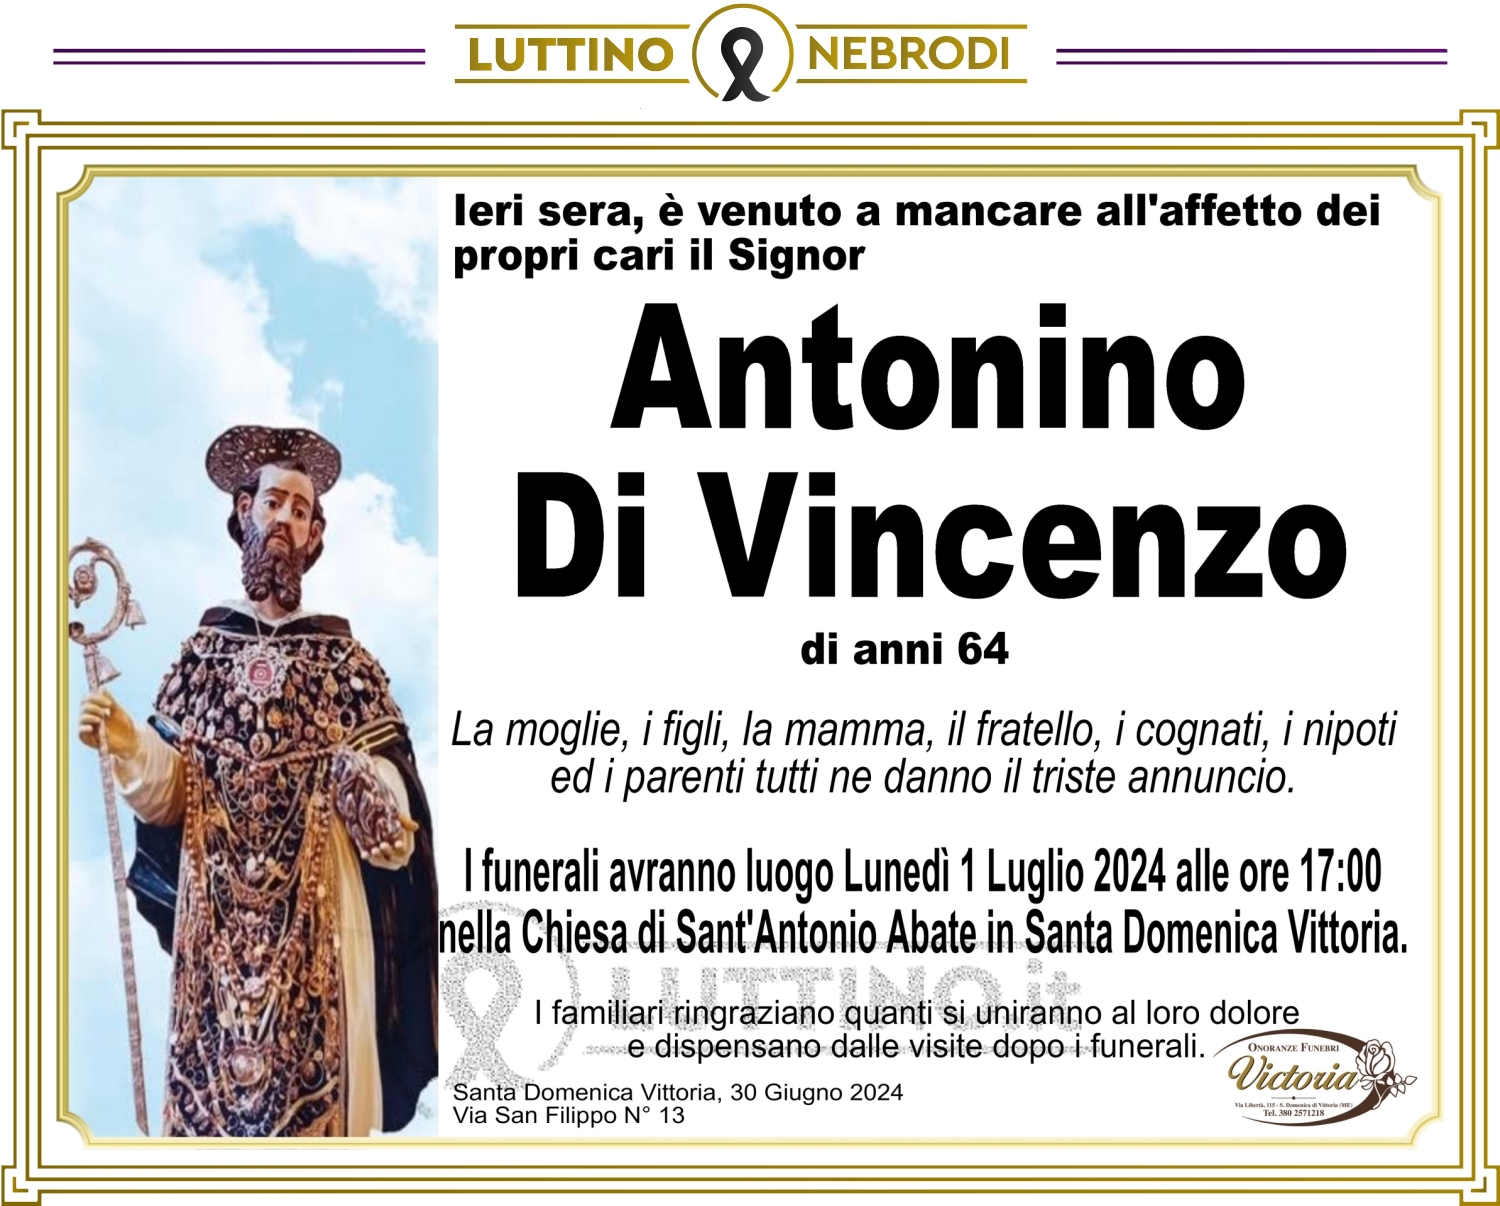 Antonino Di Vincenzo